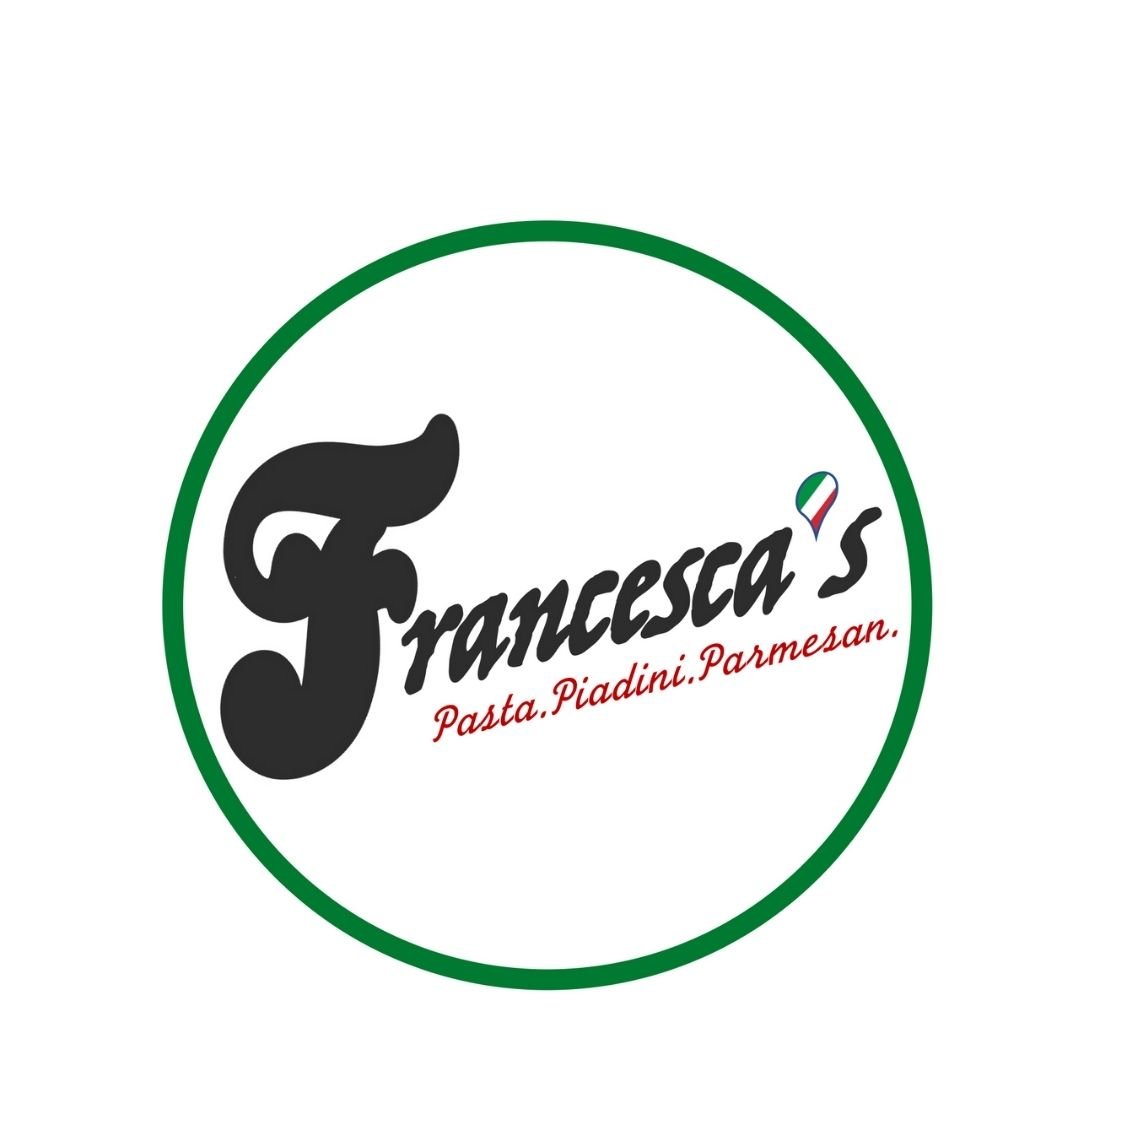 Francesca s logo.jpg